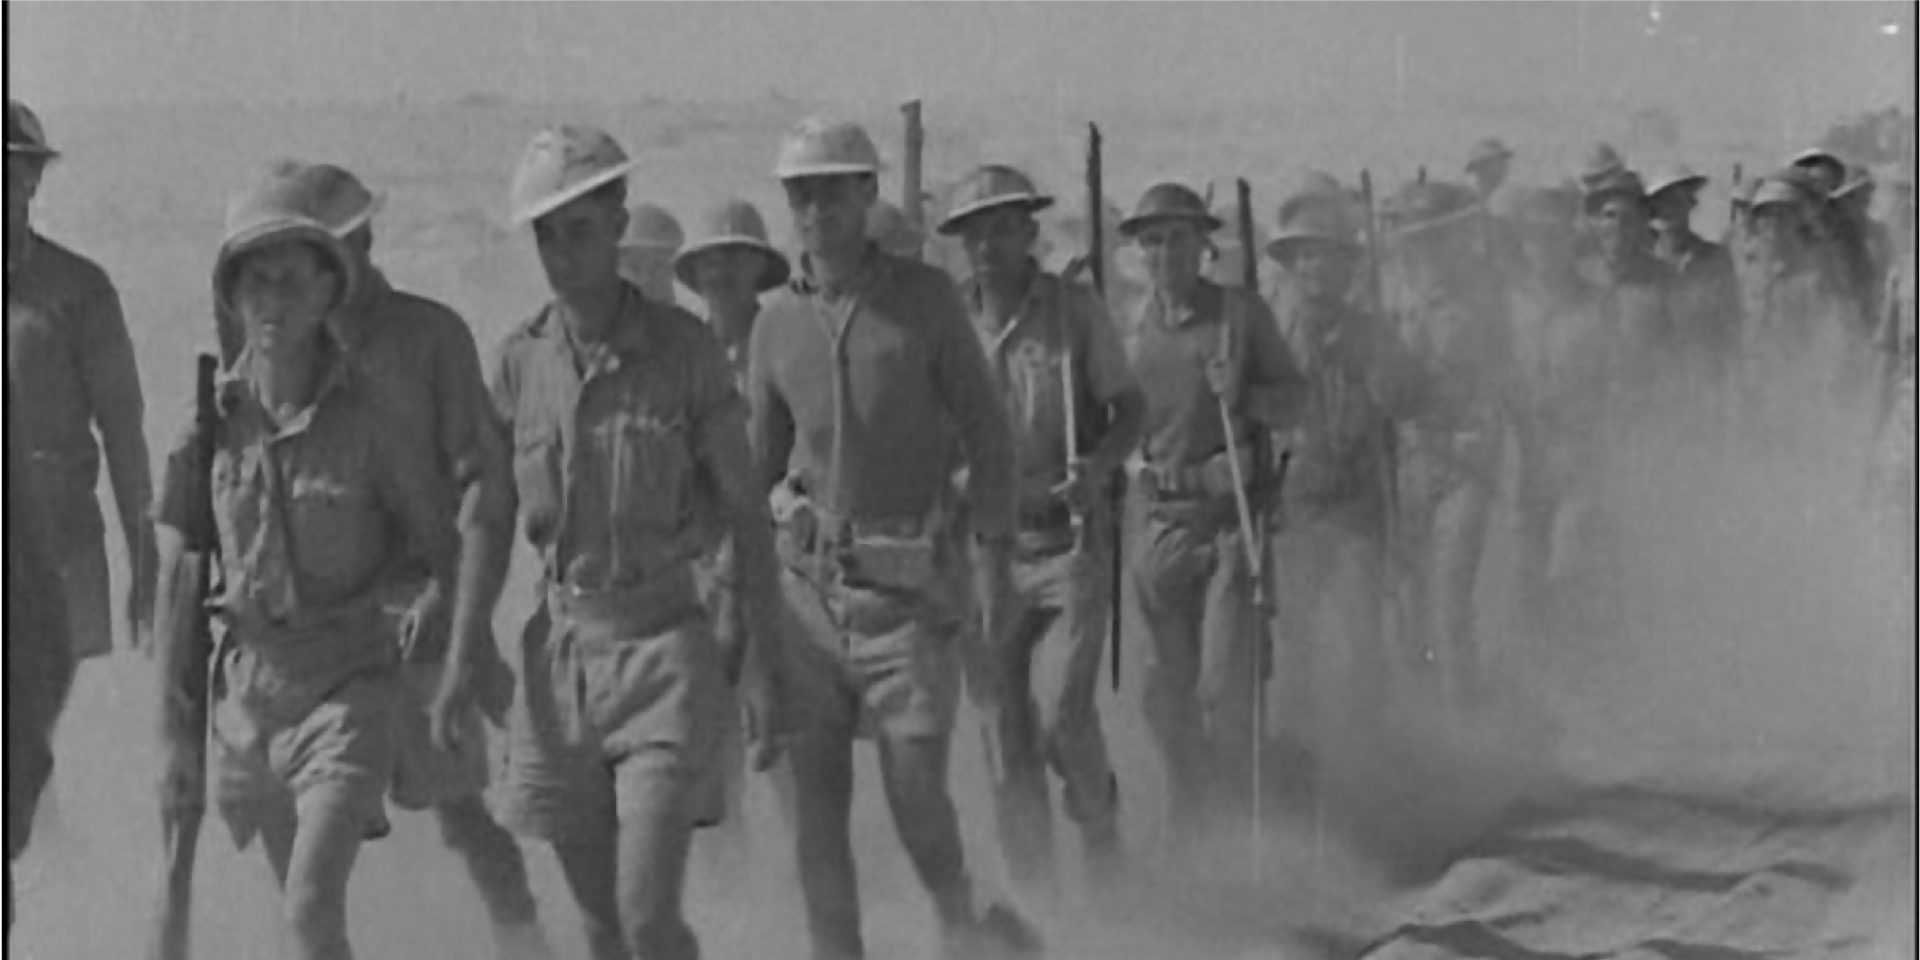 Battles of El Alamein